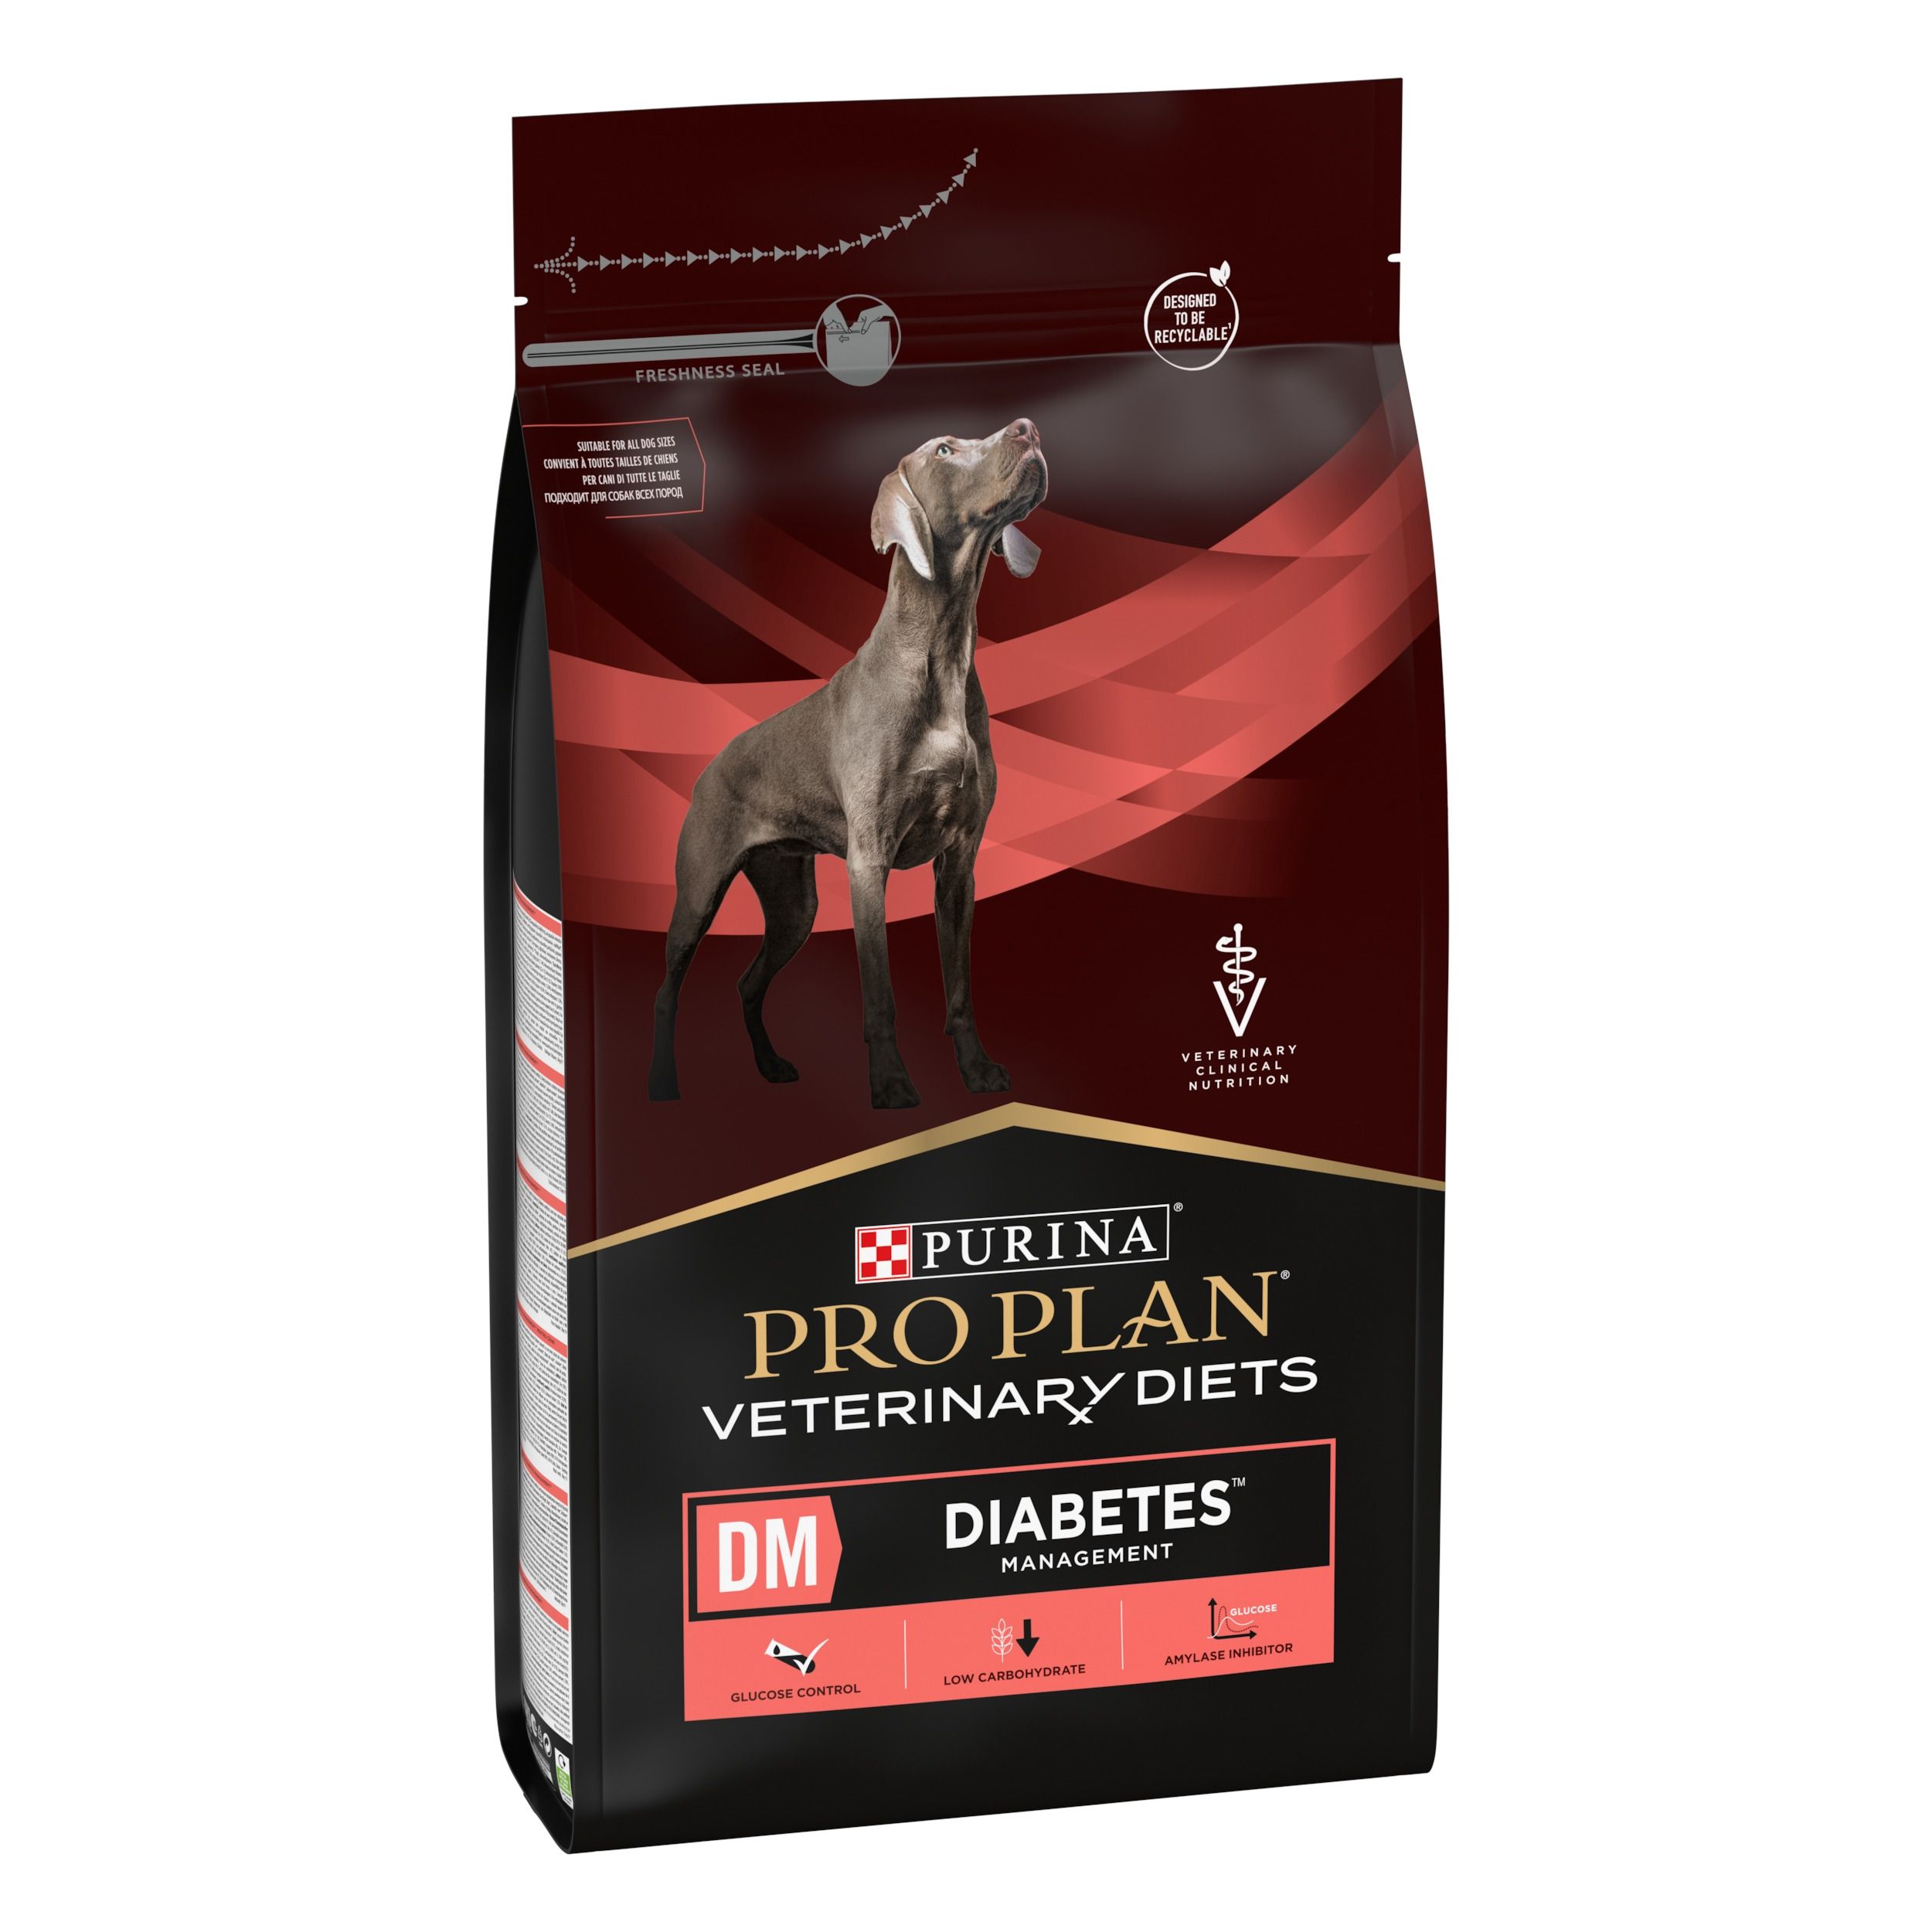 Purina Veterinary Diets Canine DM, Diabetes Management, 3 Kg